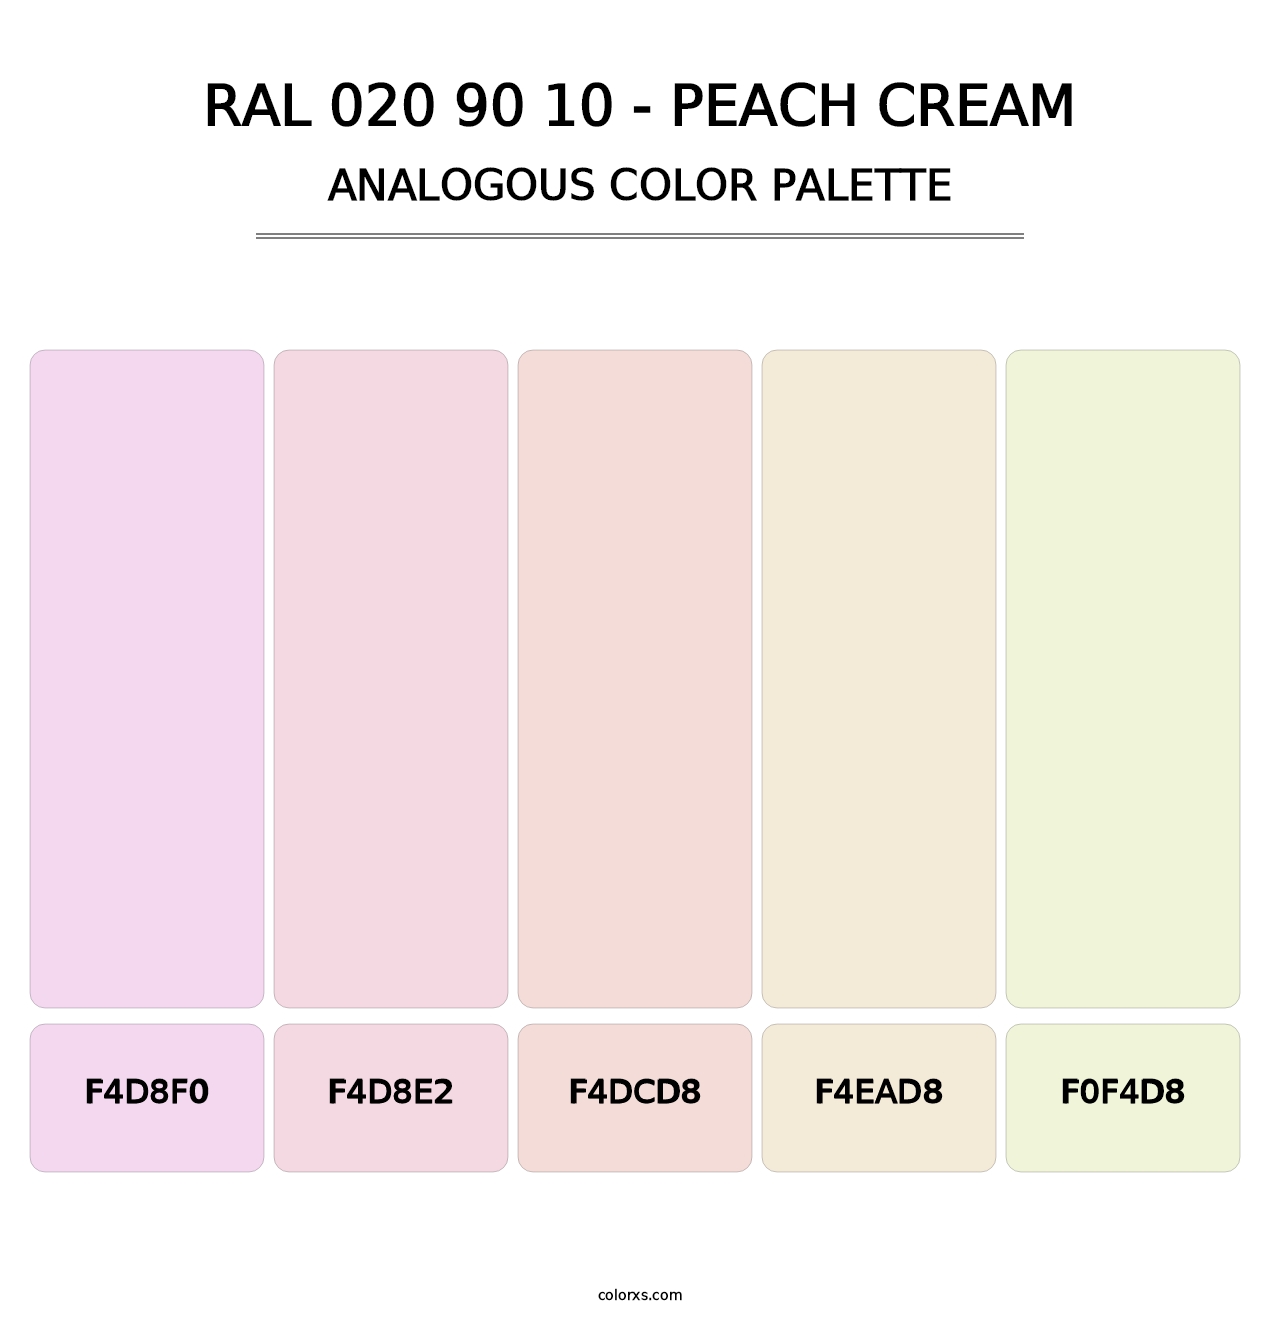 RAL 020 90 10 - Peach Cream - Analogous Color Palette